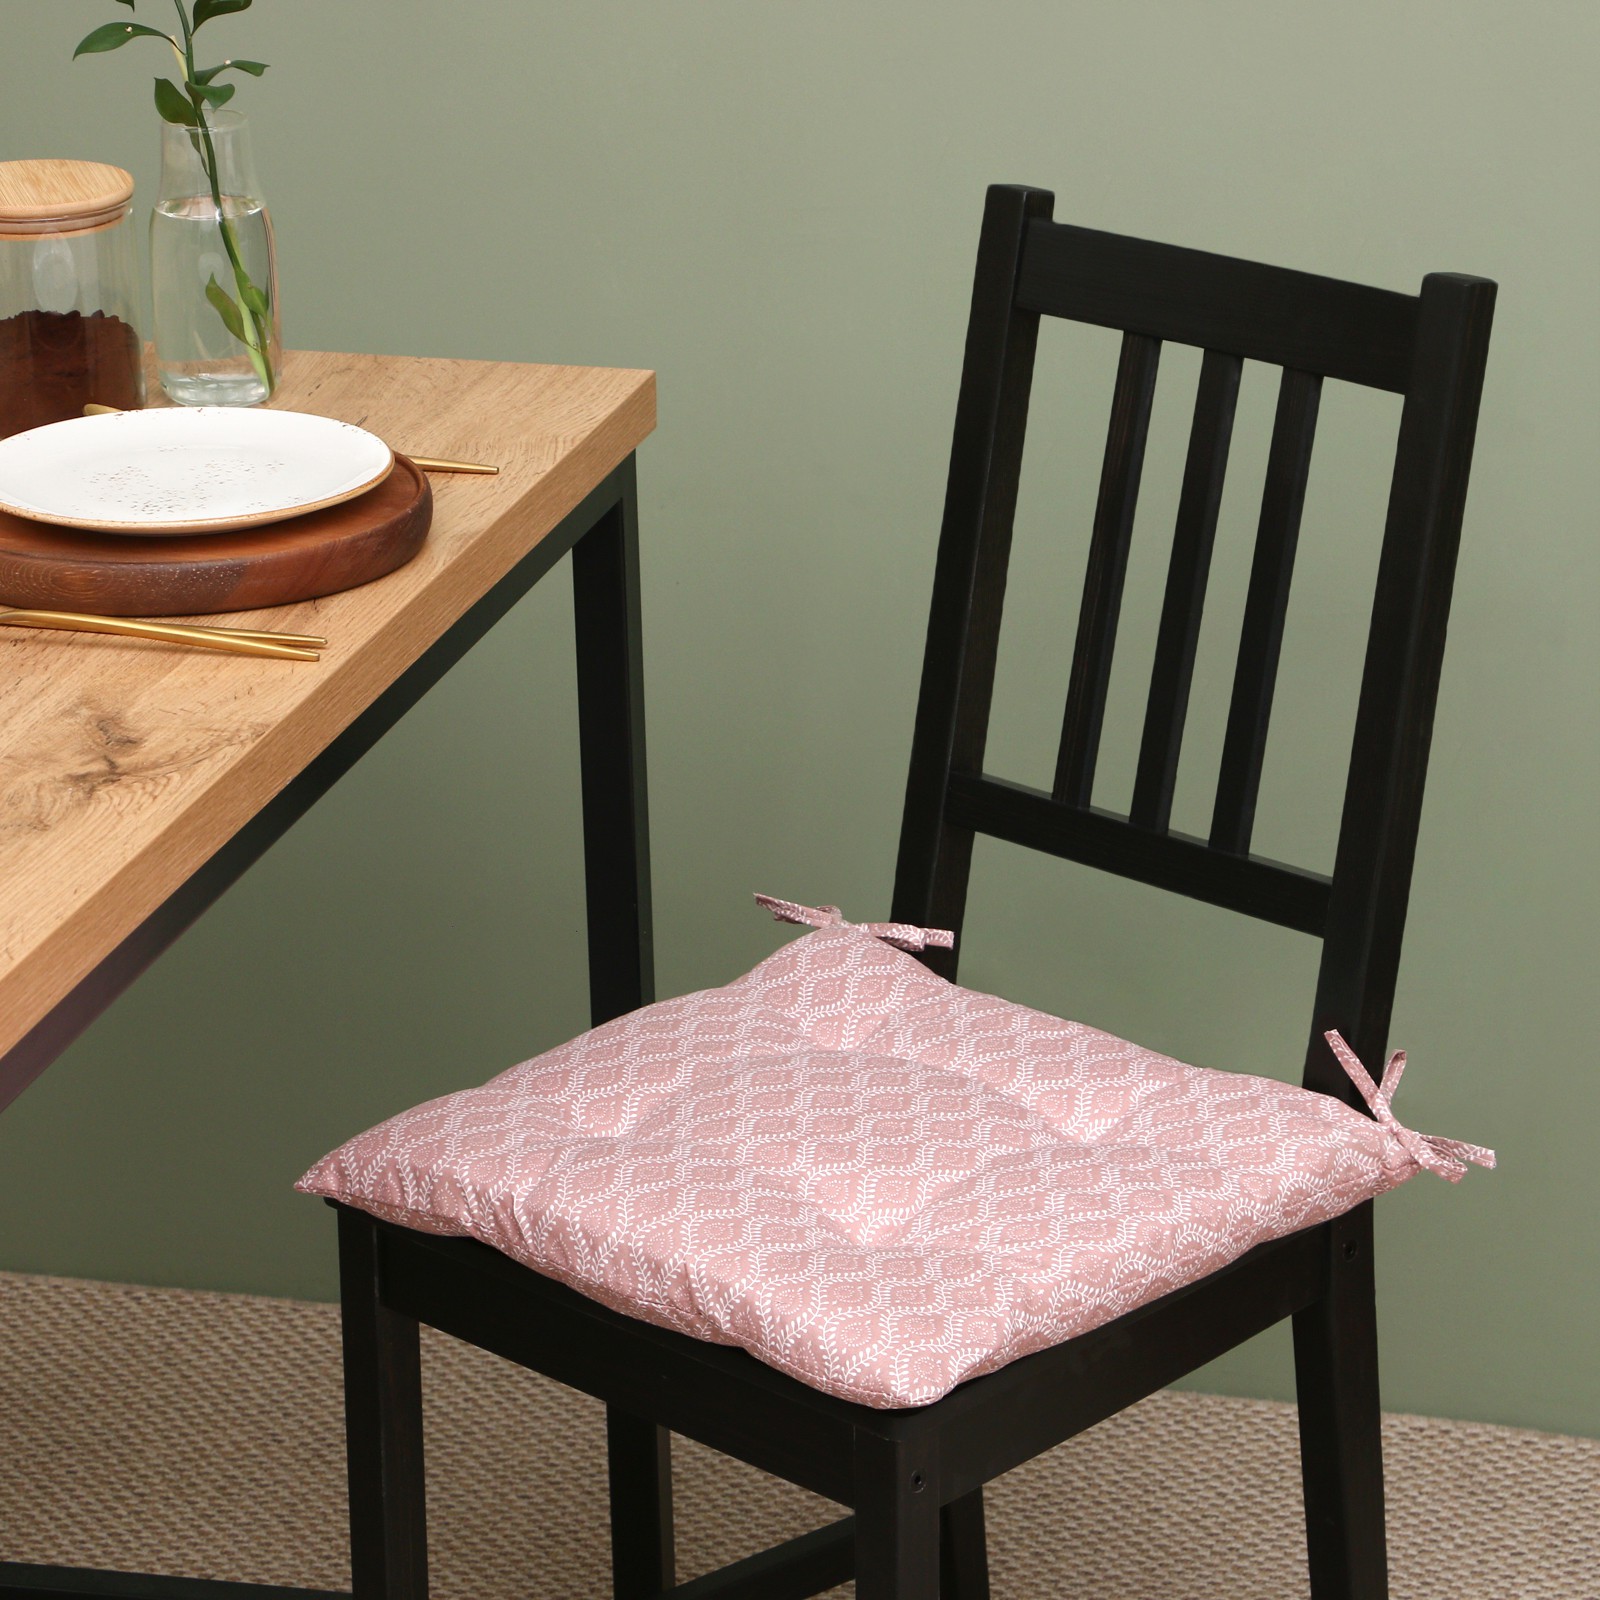 Подушка на стул Орнамент цвет: розовый (40х40), размер 40х40 tel914158 Подушка на стул Орнамент цвет: розовый (40х40) - фото 1